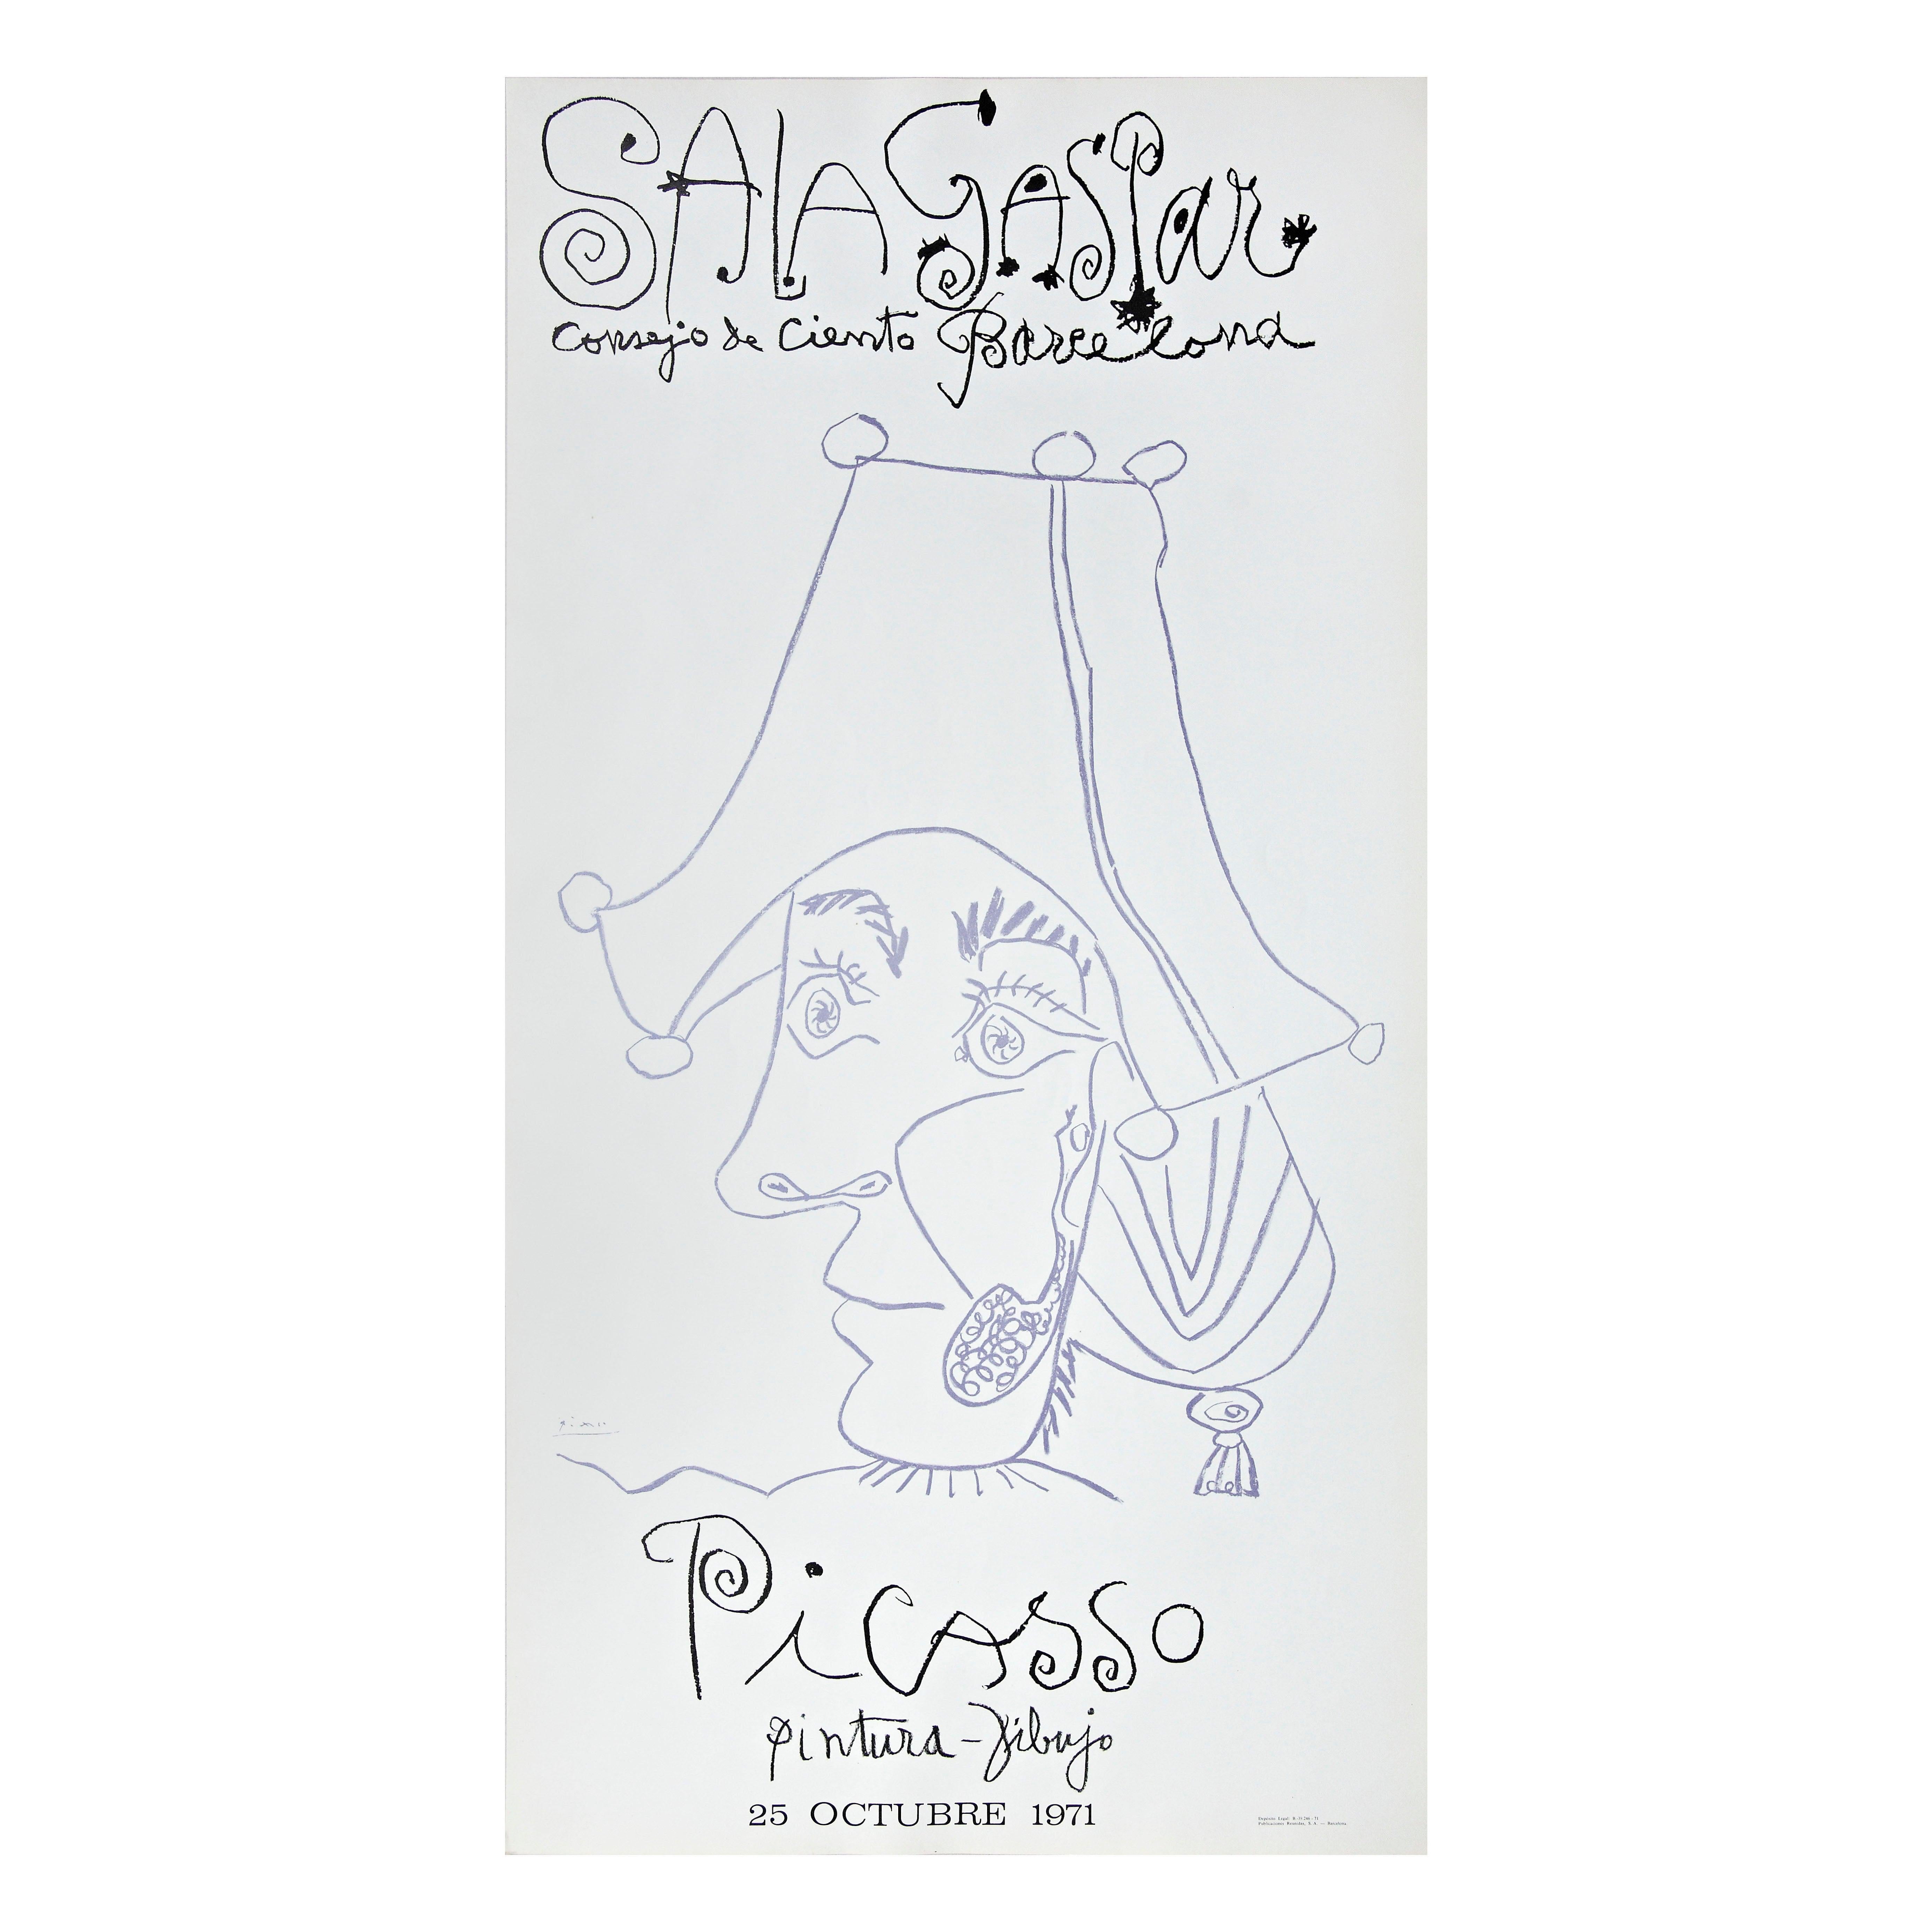 Spanish Original Picasso Lithography, Exhibition 1971